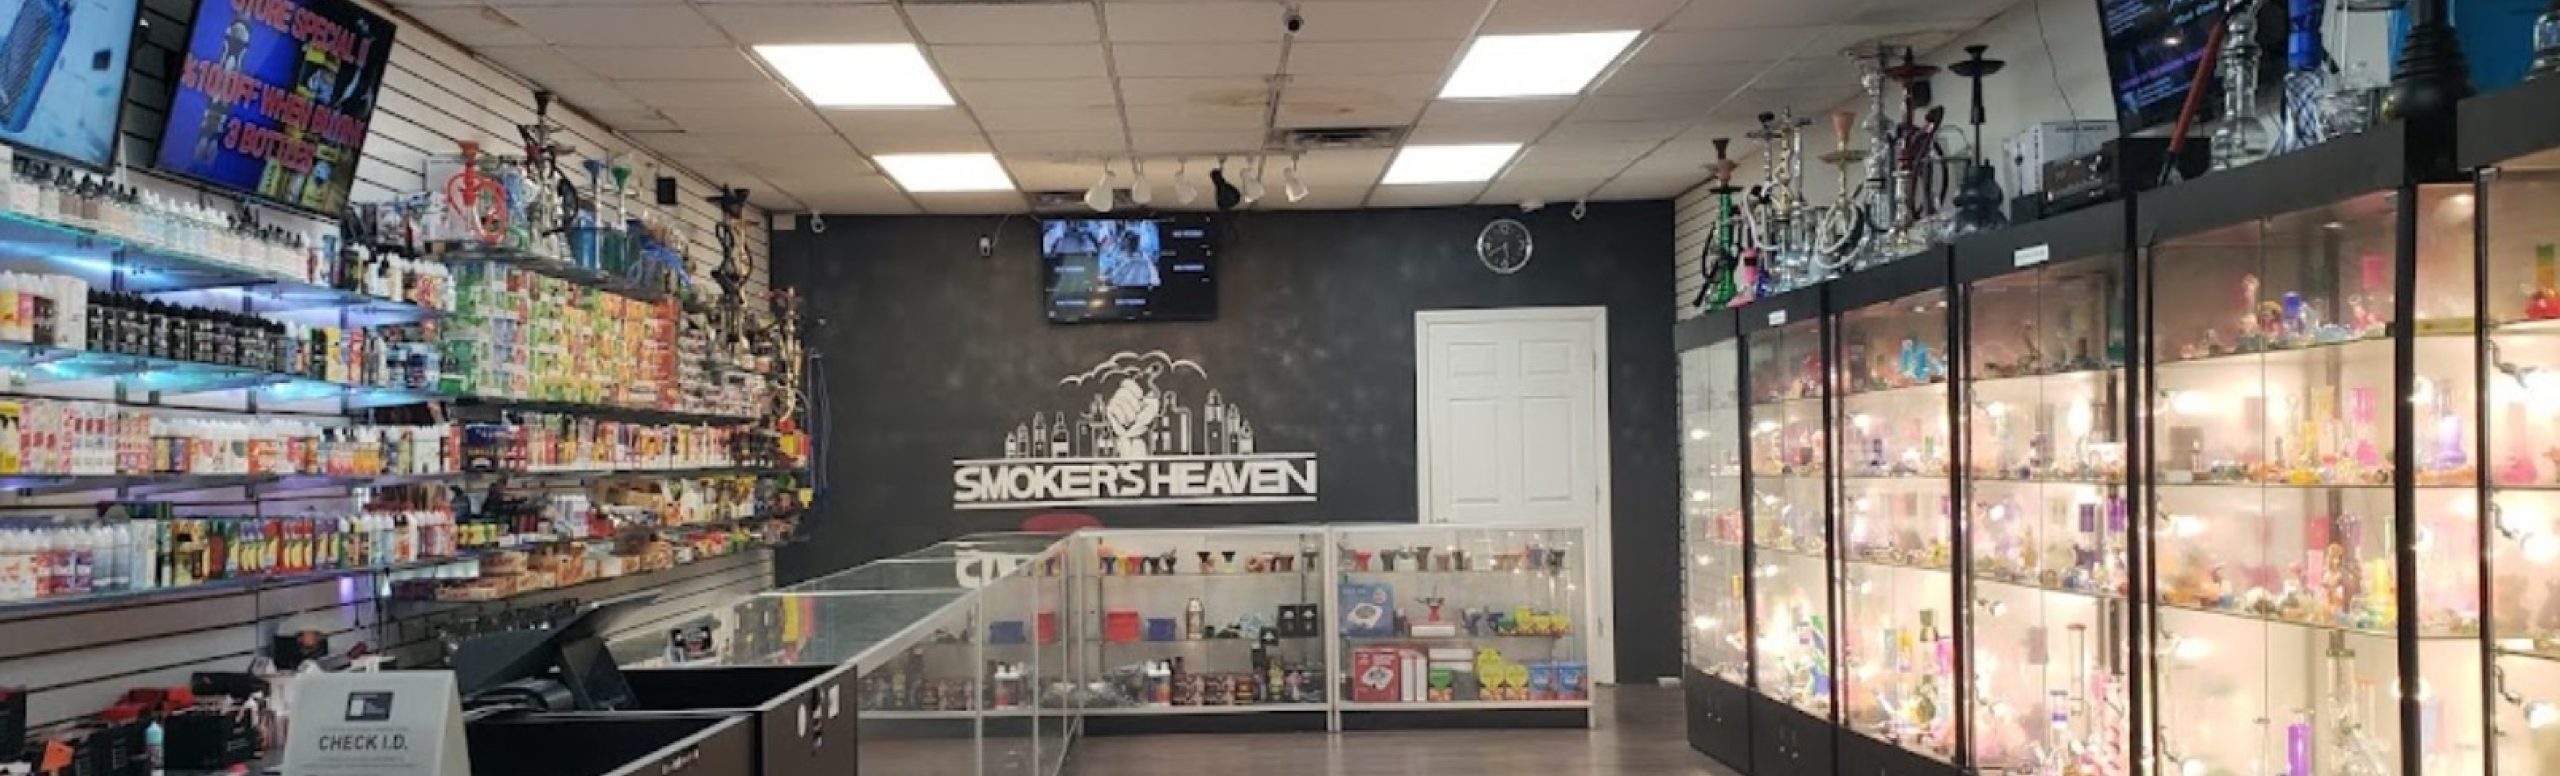 image of smokers heaven smoke & vape shop in jersey city nj